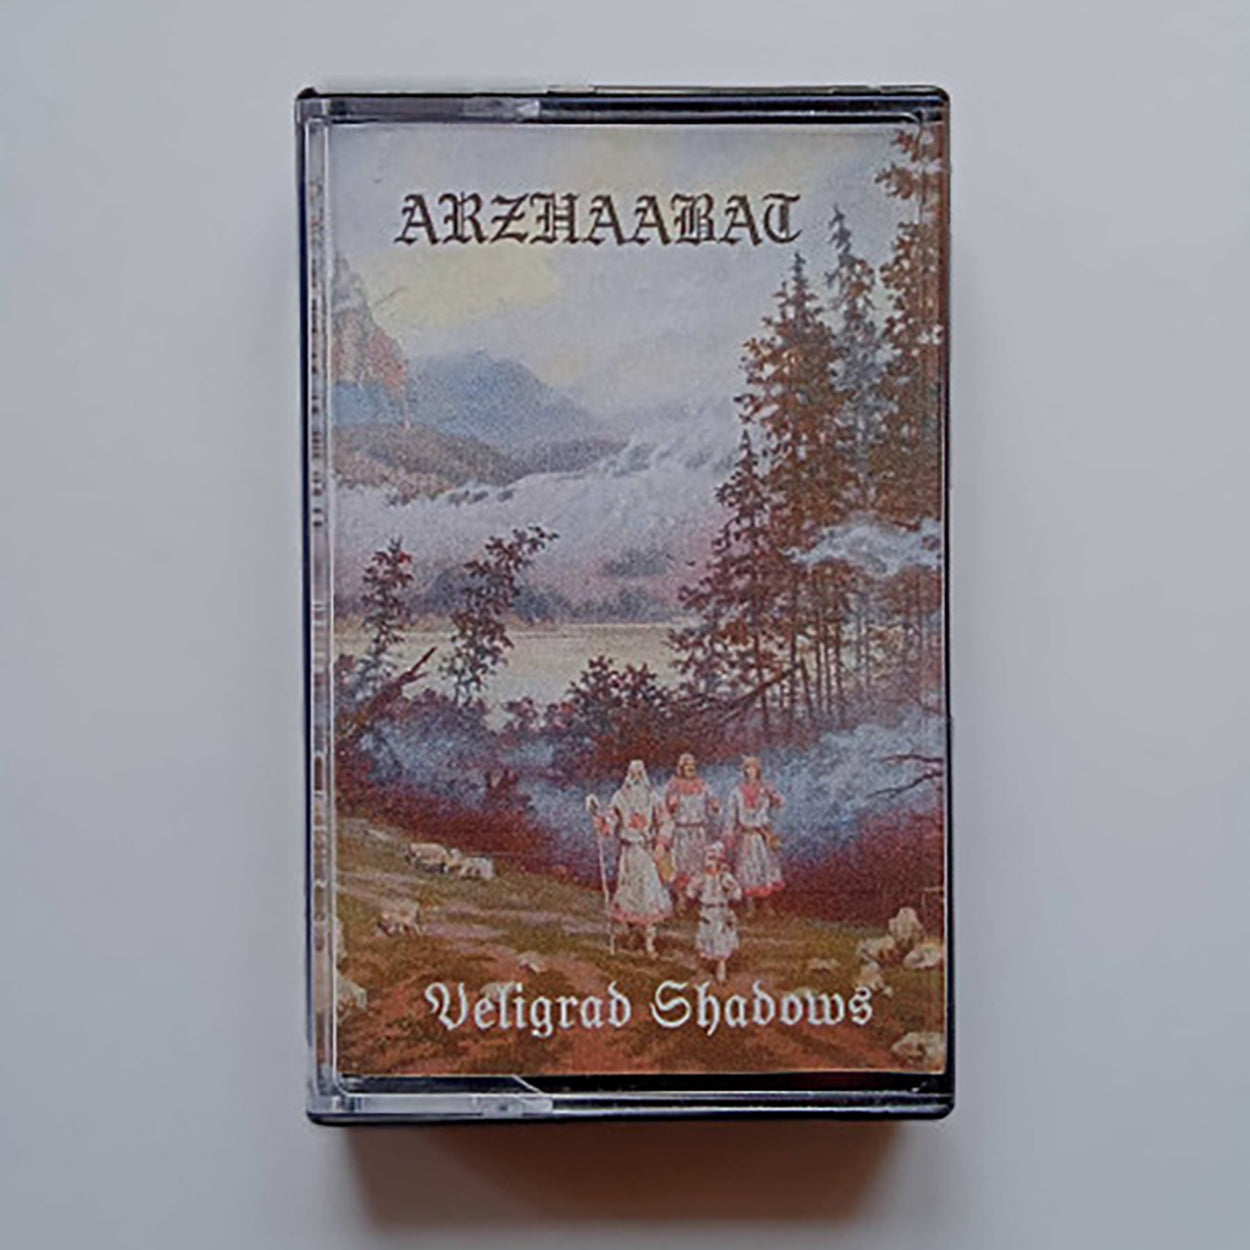 Arzhaabat - Veligrad Shadows